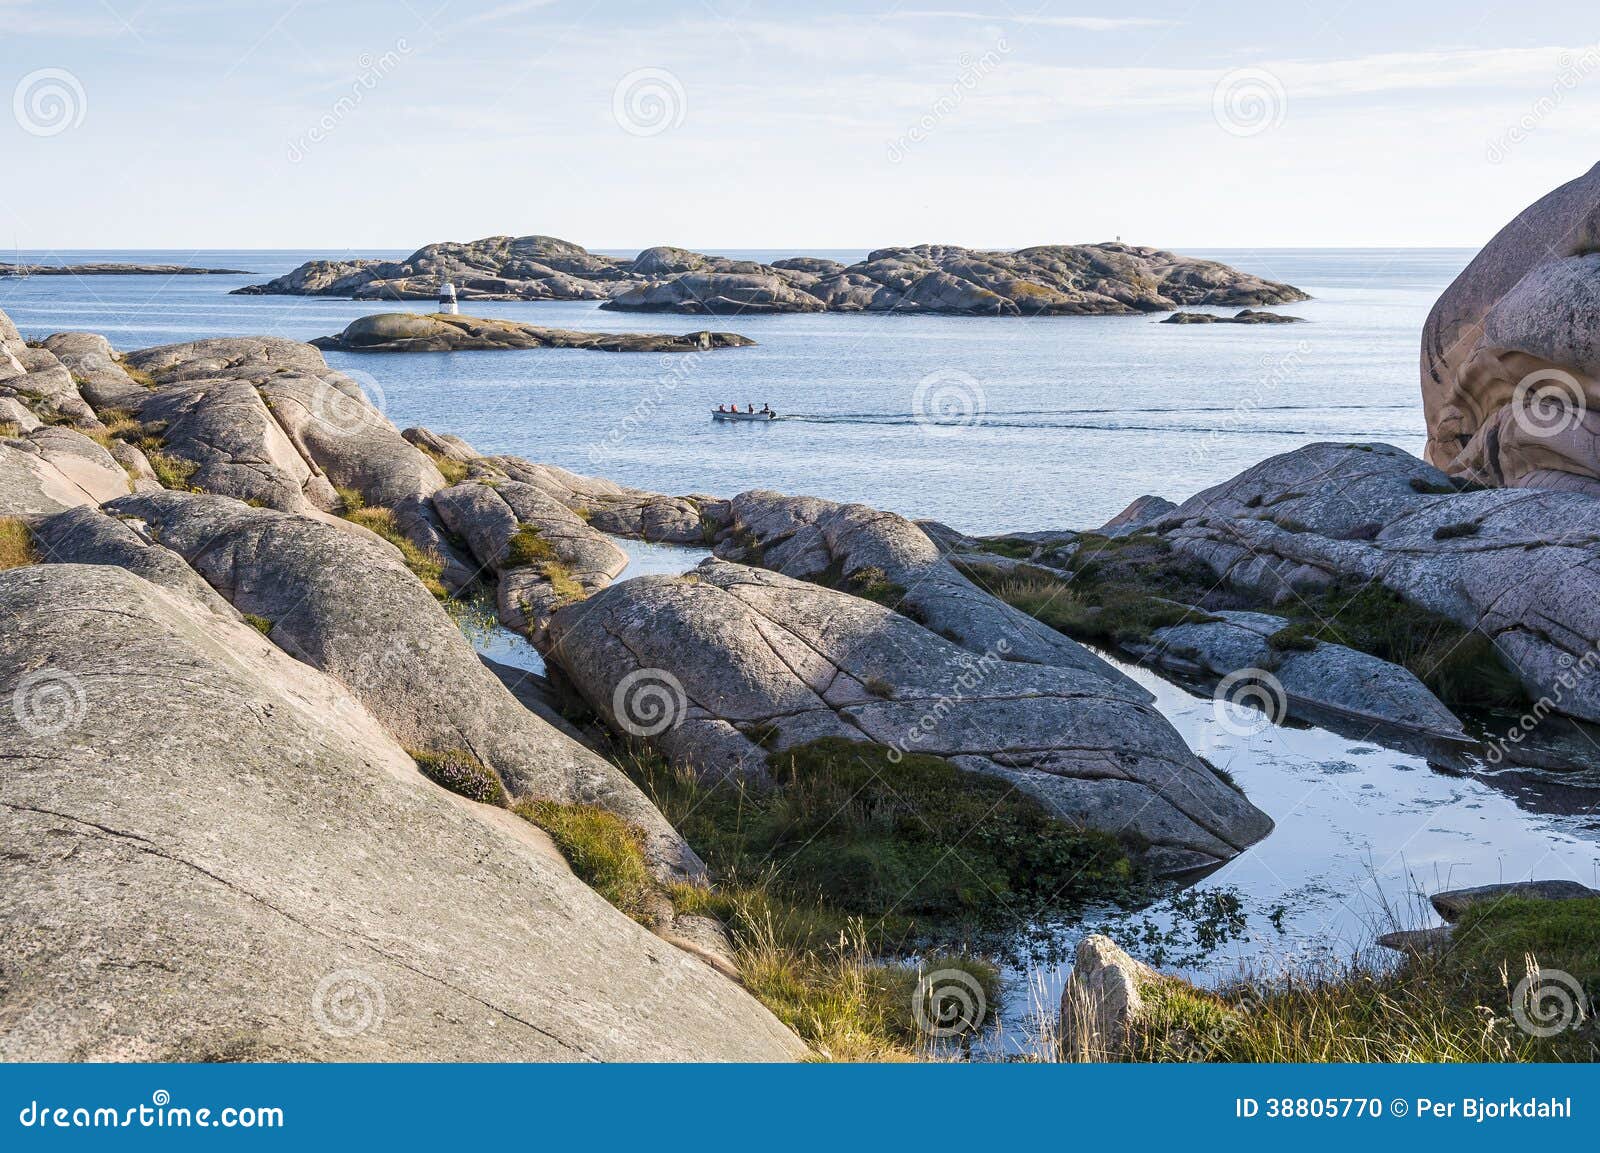 archipelago view swedish west coast archipelago